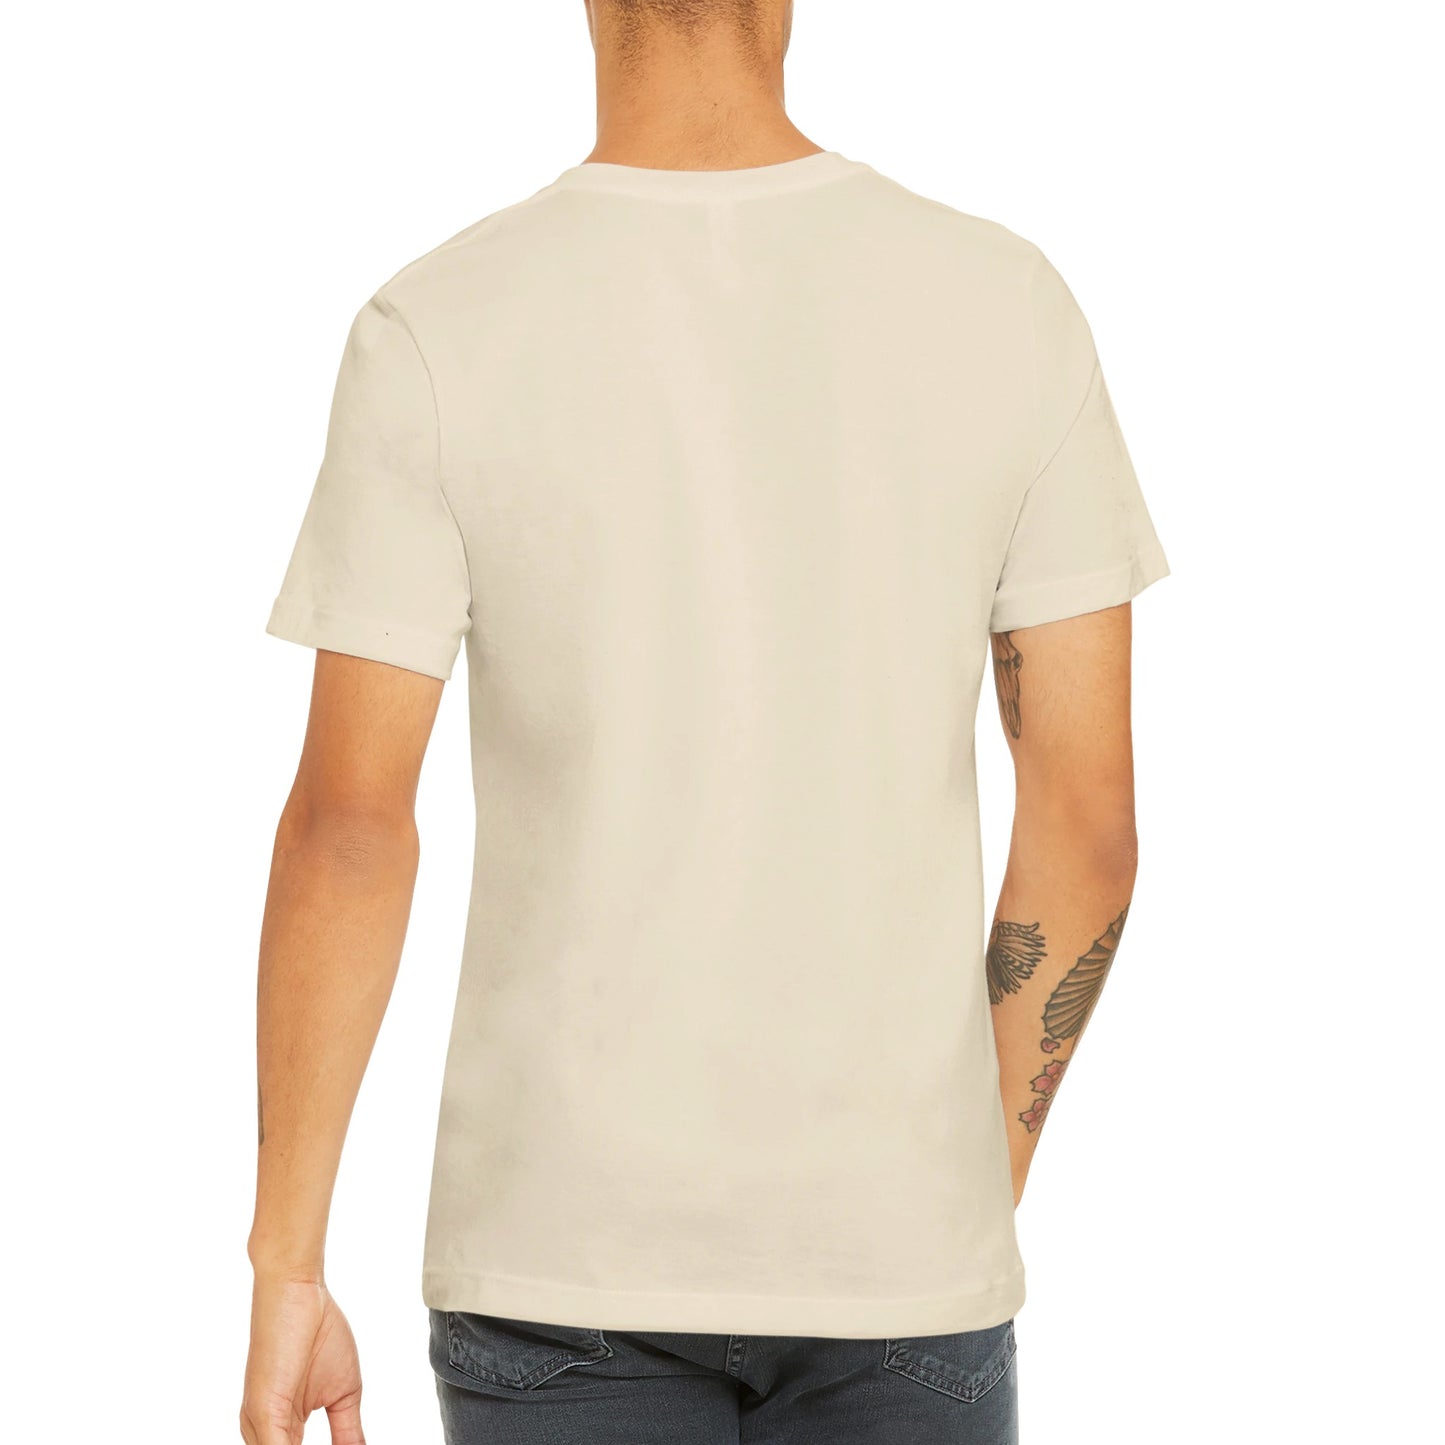 Budget Unisex Crewneck T-shirt/Not-In-Service